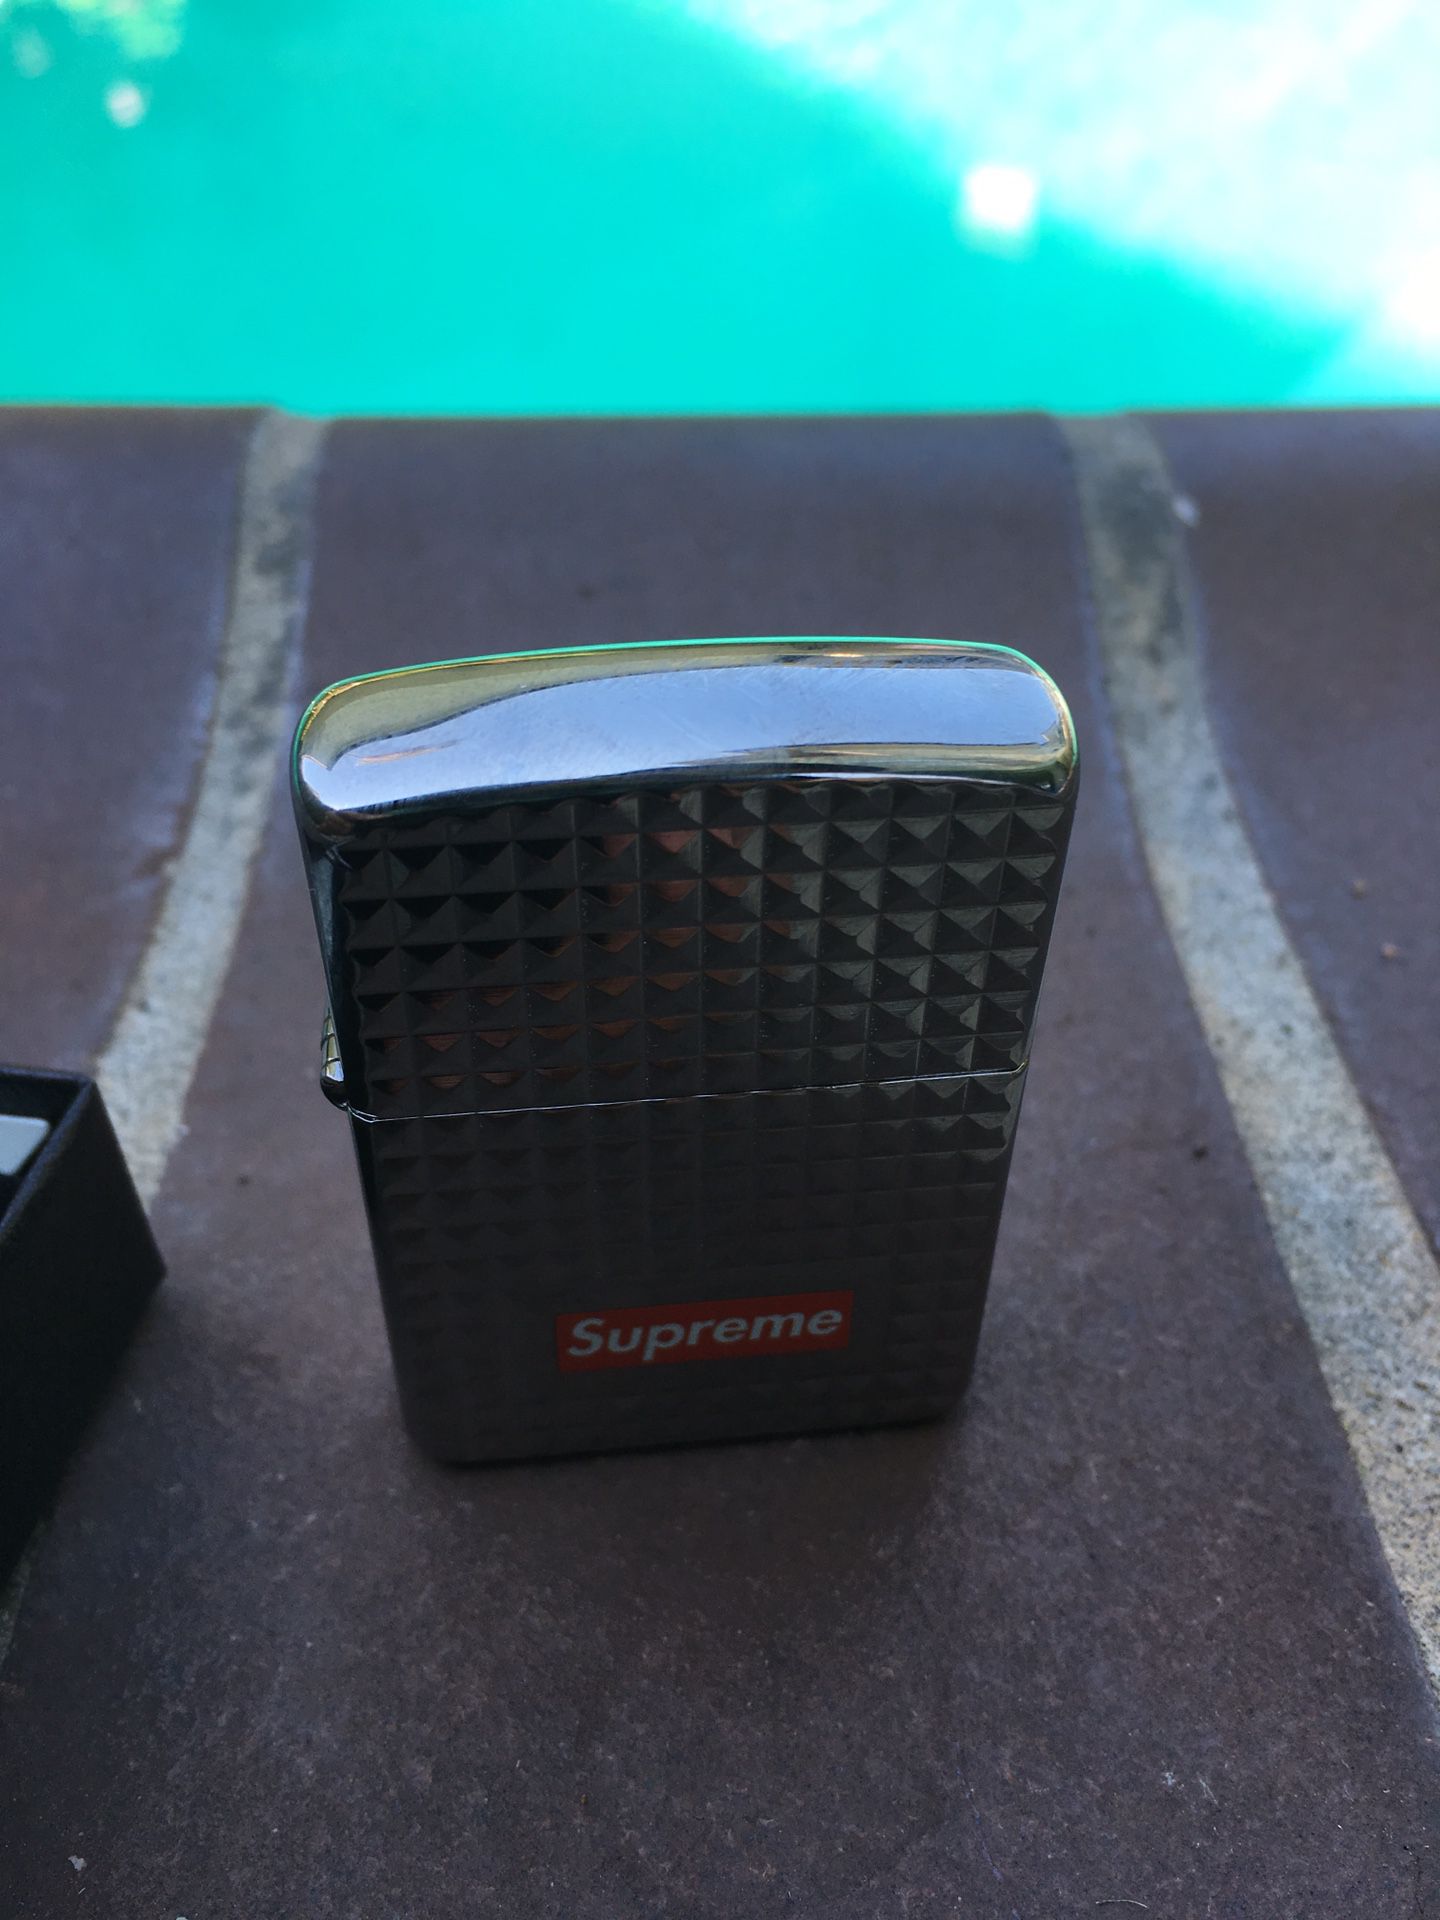 New Supreme Zippo Lighter In Box